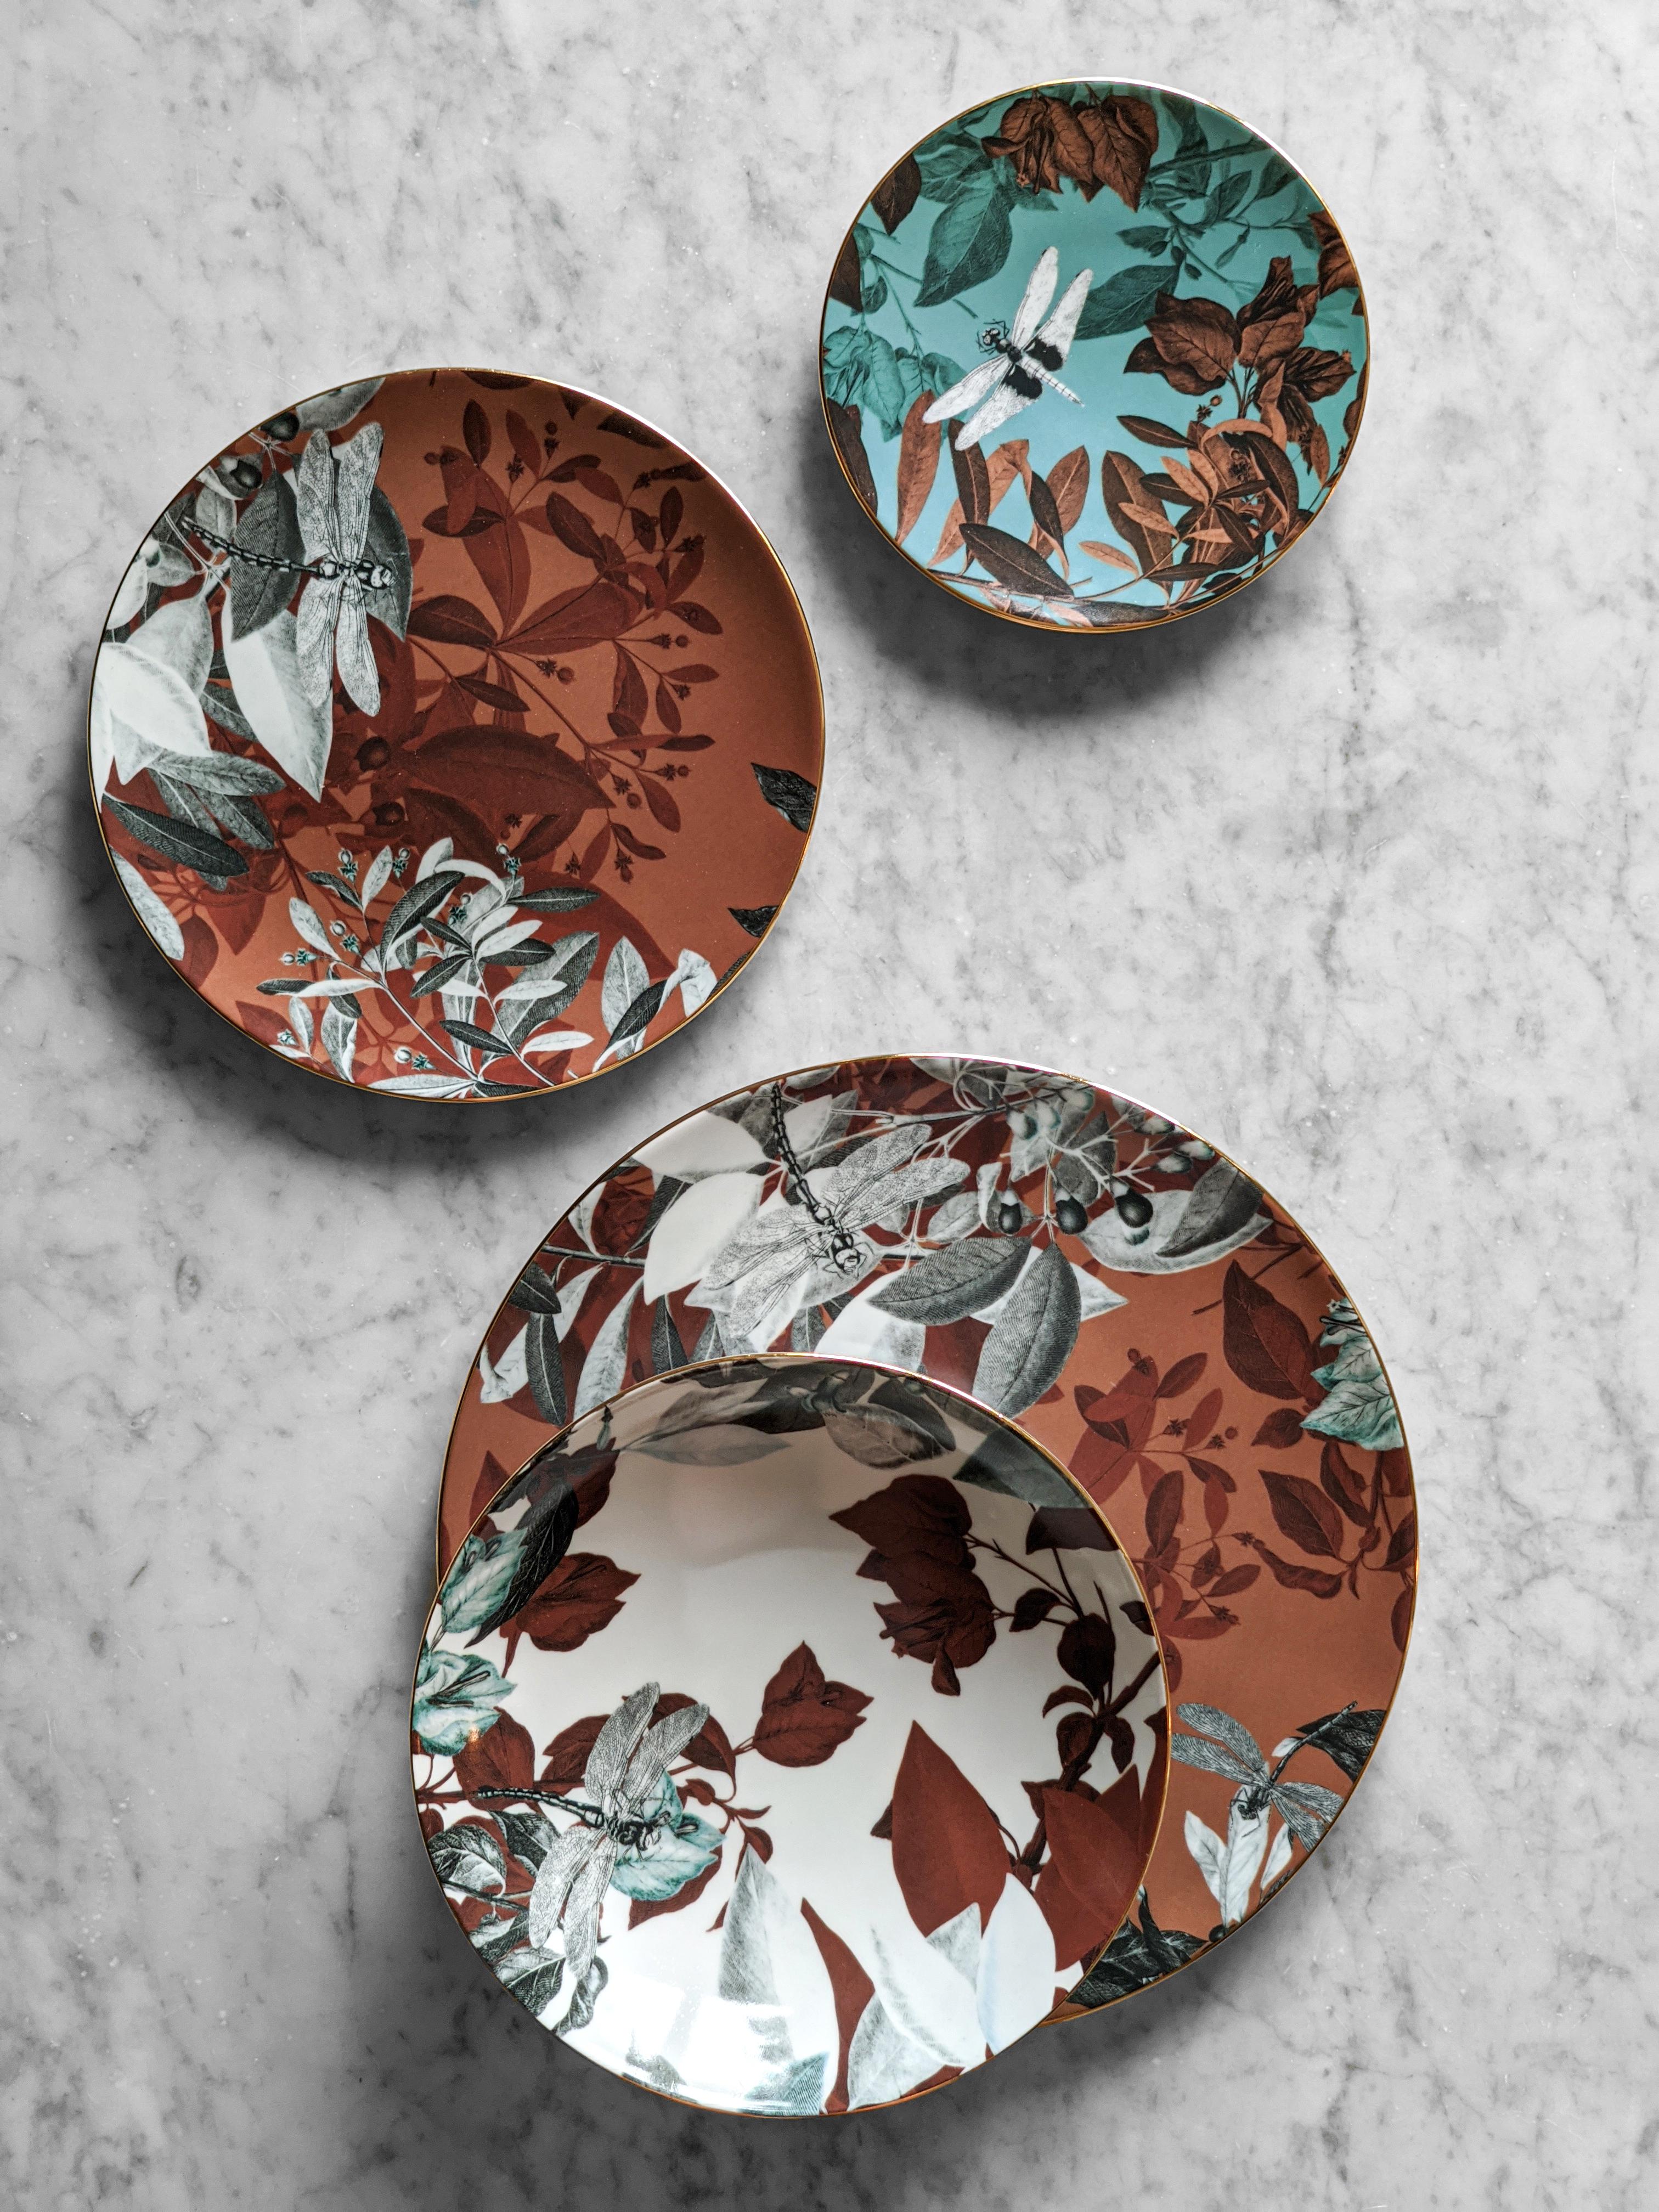 Black Dragon, Six Contemporary Porcelain Bread Plates with Decorative Design For Sale 5